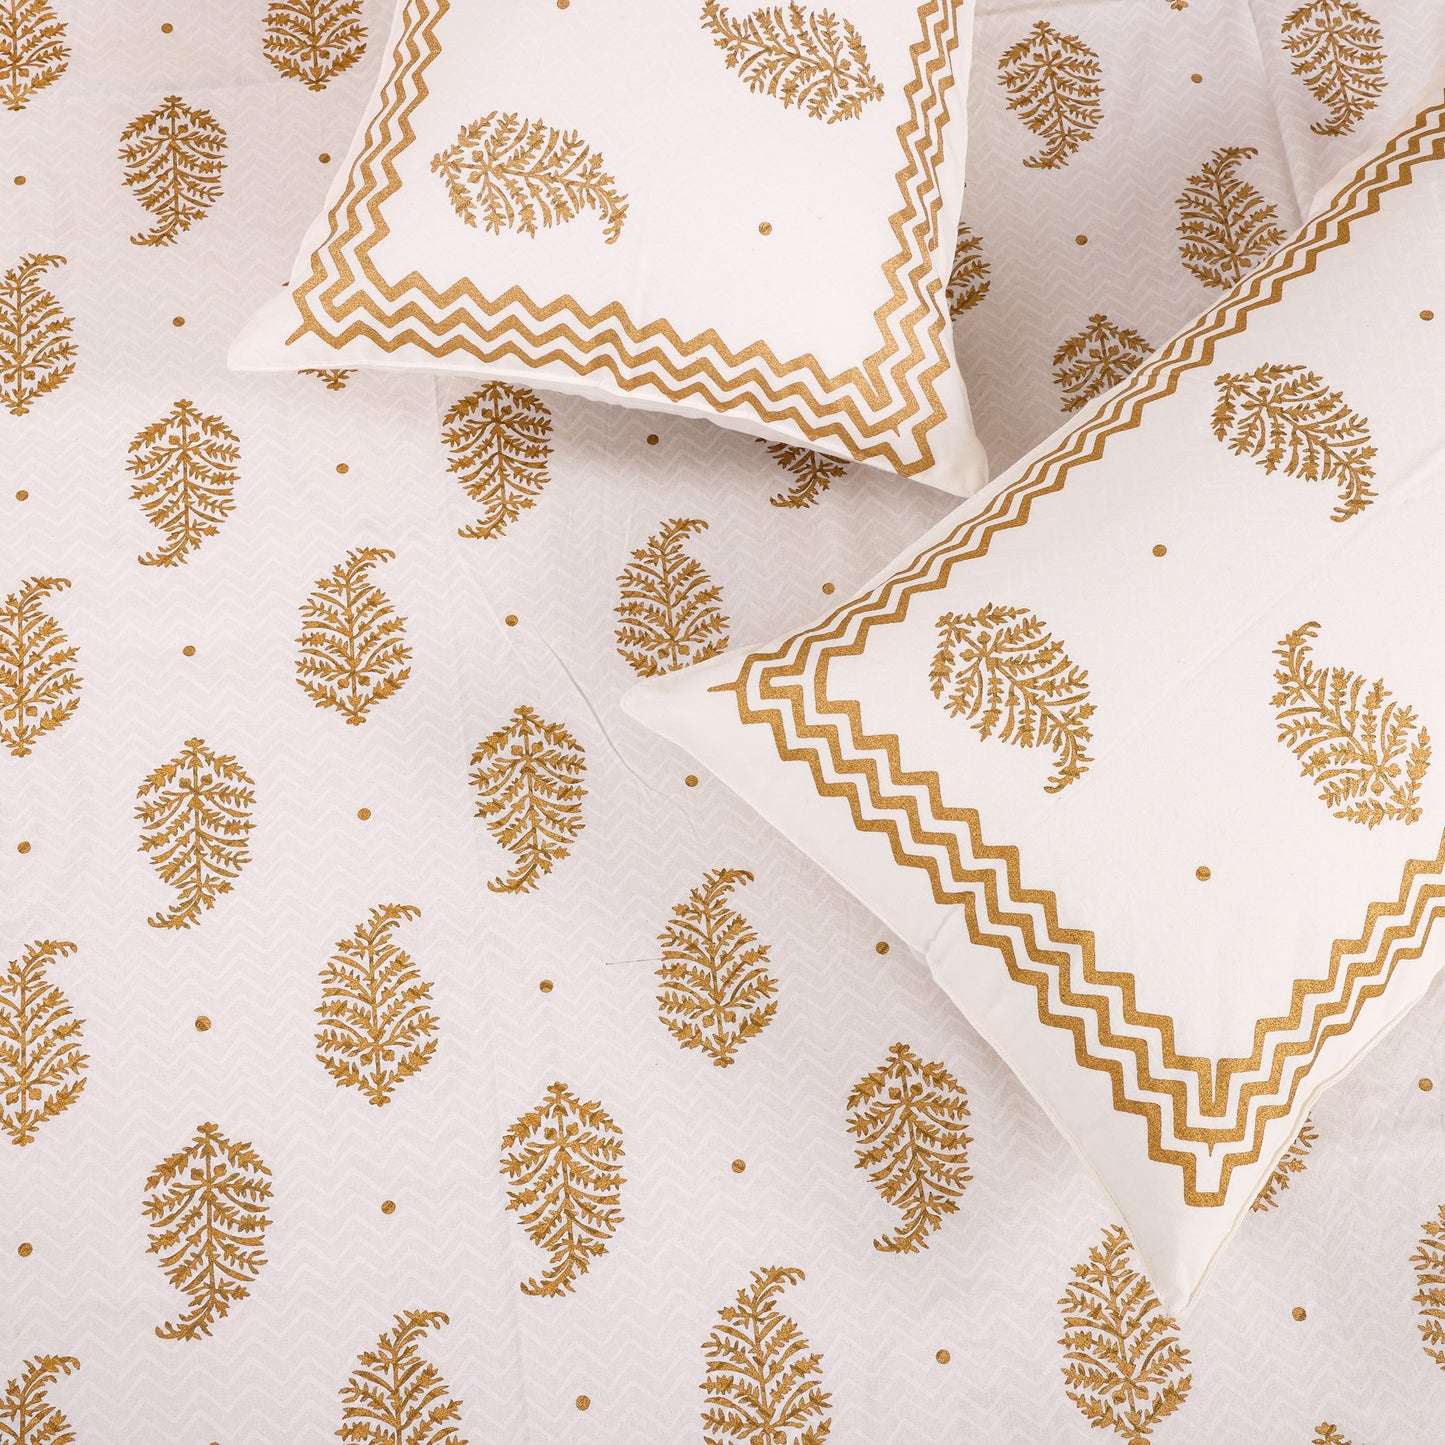 Pure Cotton Block Print Jaipuri Bedsheet - King Size 90*108 inches - Gold Paisley